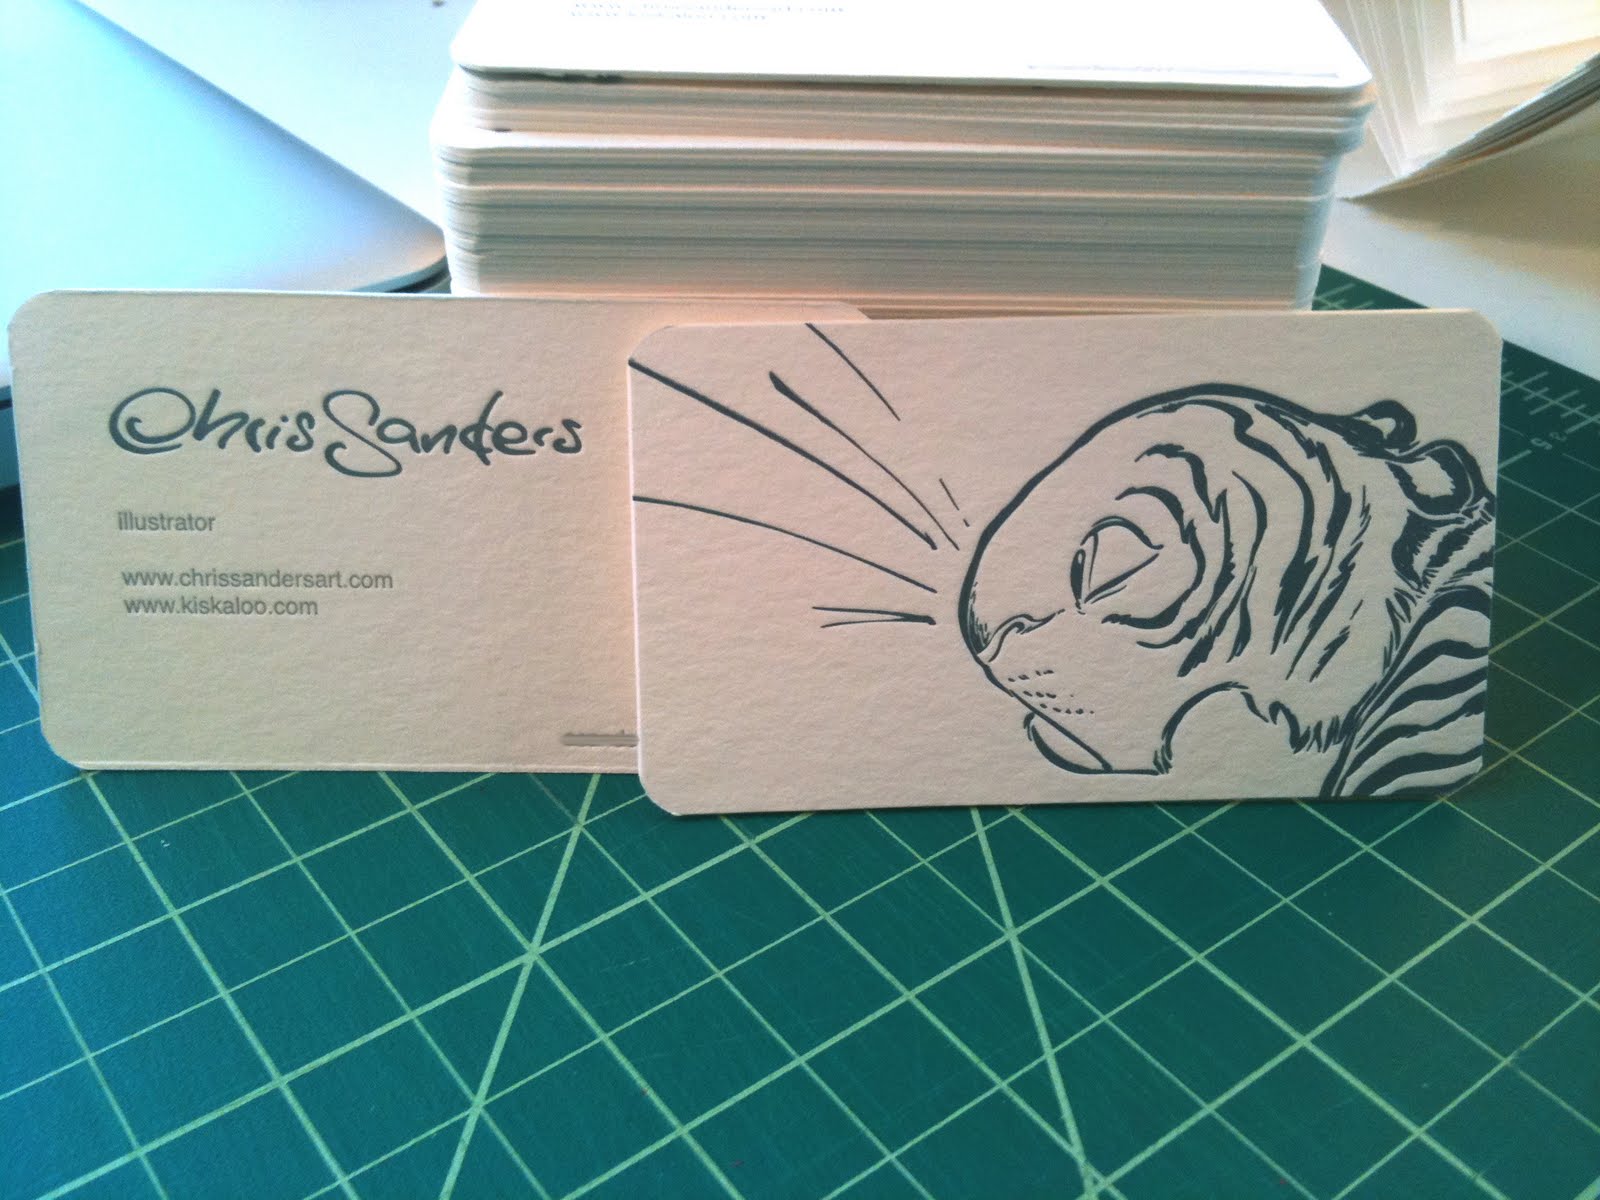 mandy sechrist's blog A Chris Sanders business card